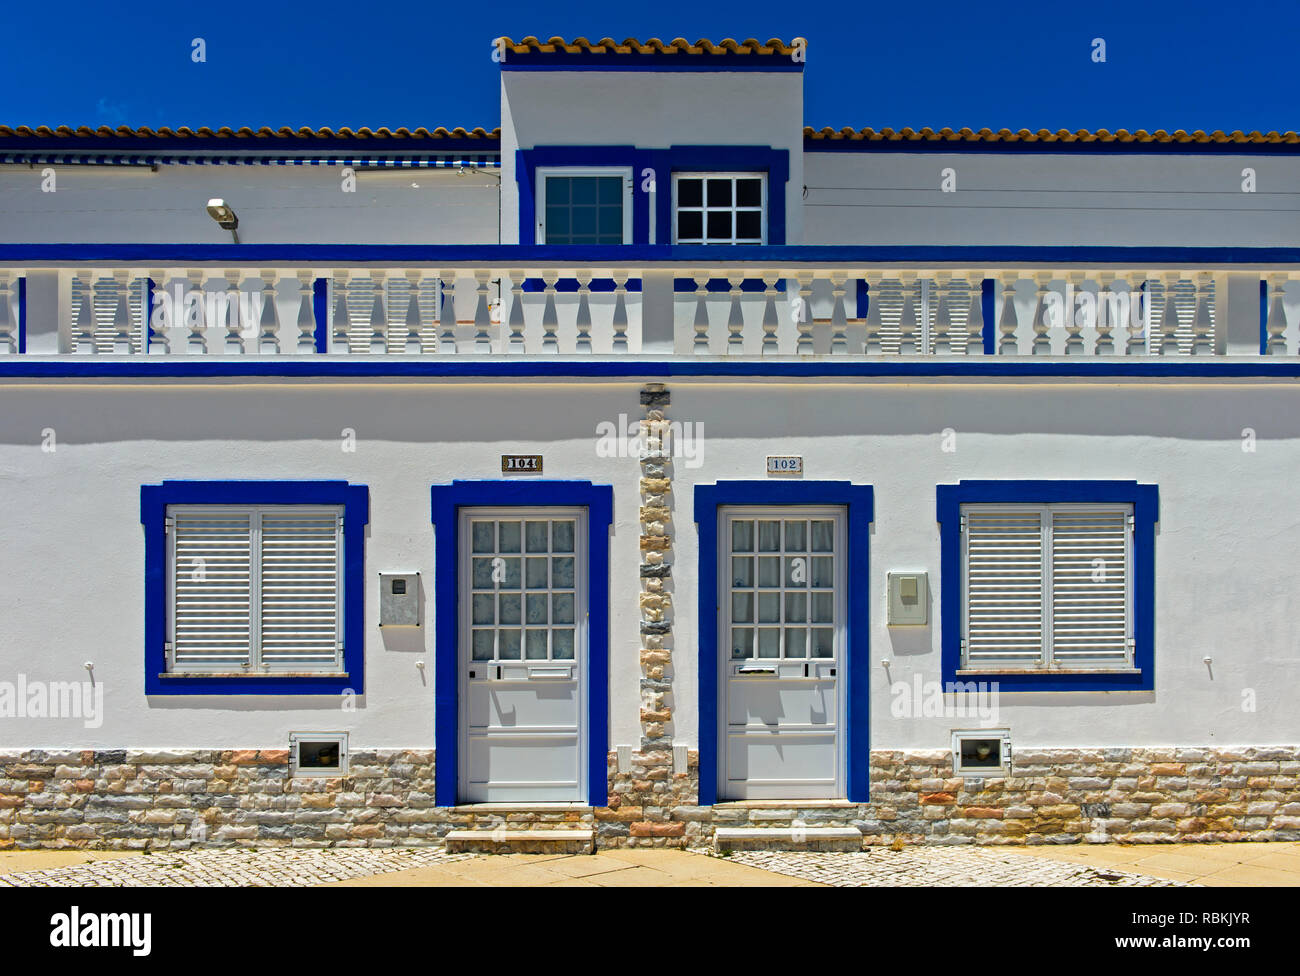 Wohnhaus im mediterranen Stil, Santa Luzia, Algarve, Portugal Stockfoto